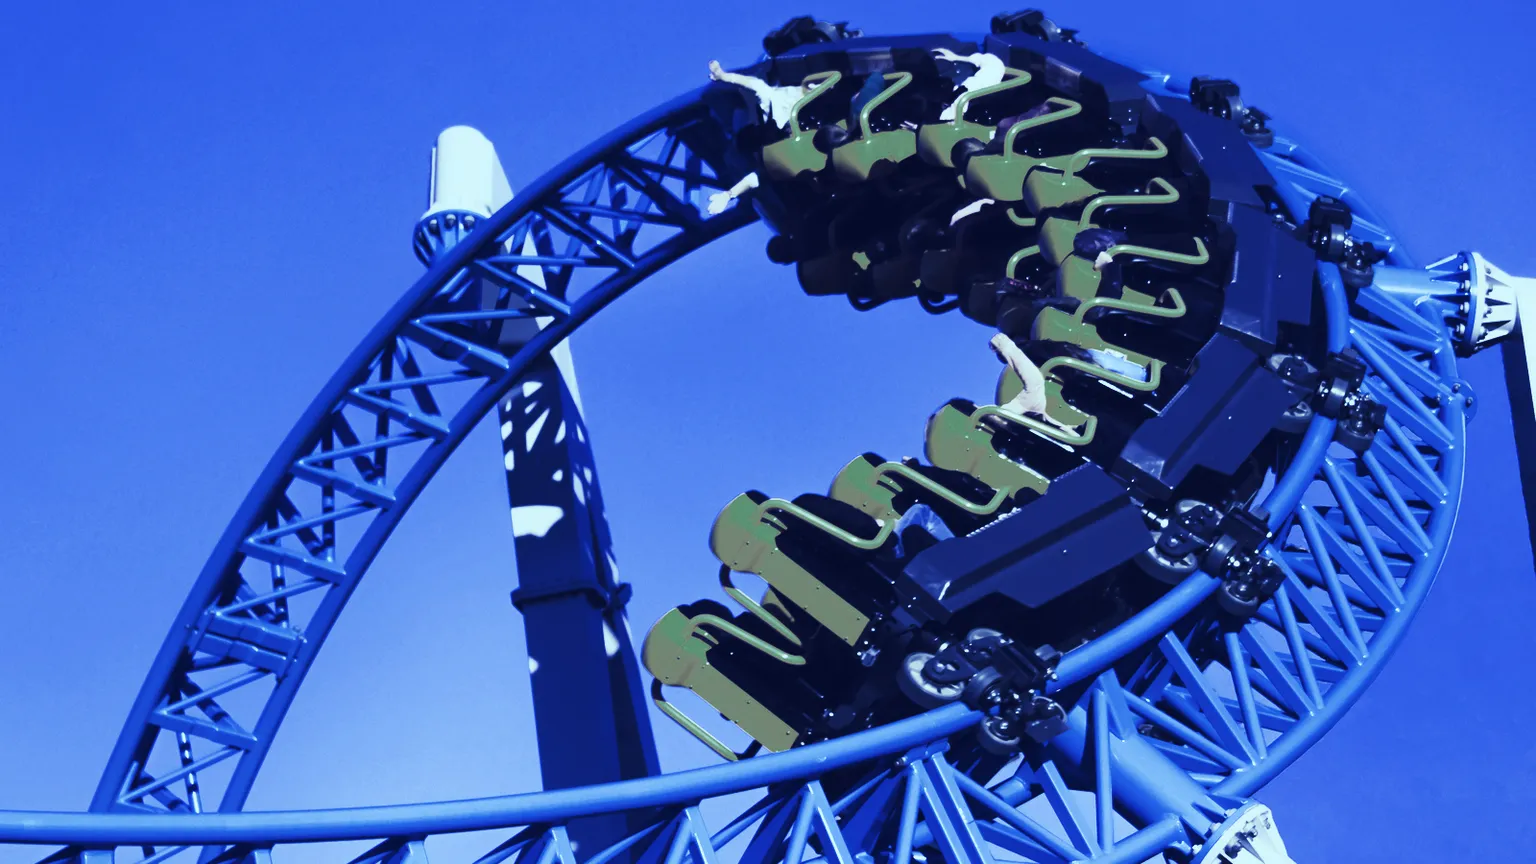 A roller coaster. Image: Shutterstock